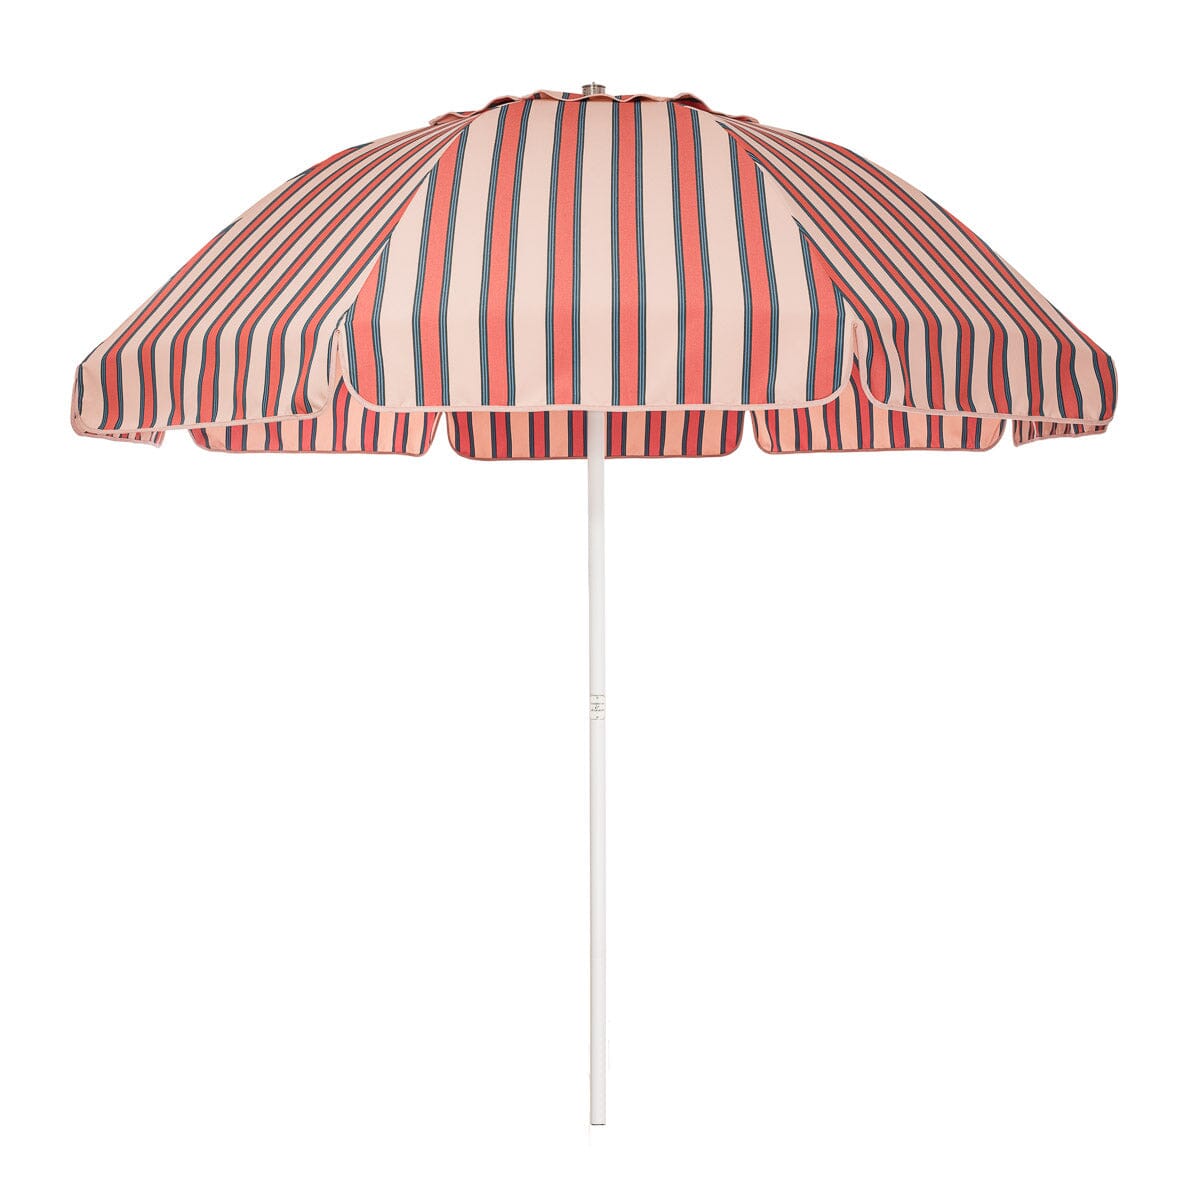 The Patio Umbrella - Bistro Dusty Pink Stripe Patio Umbrella Business & Pleasure Co Aus 